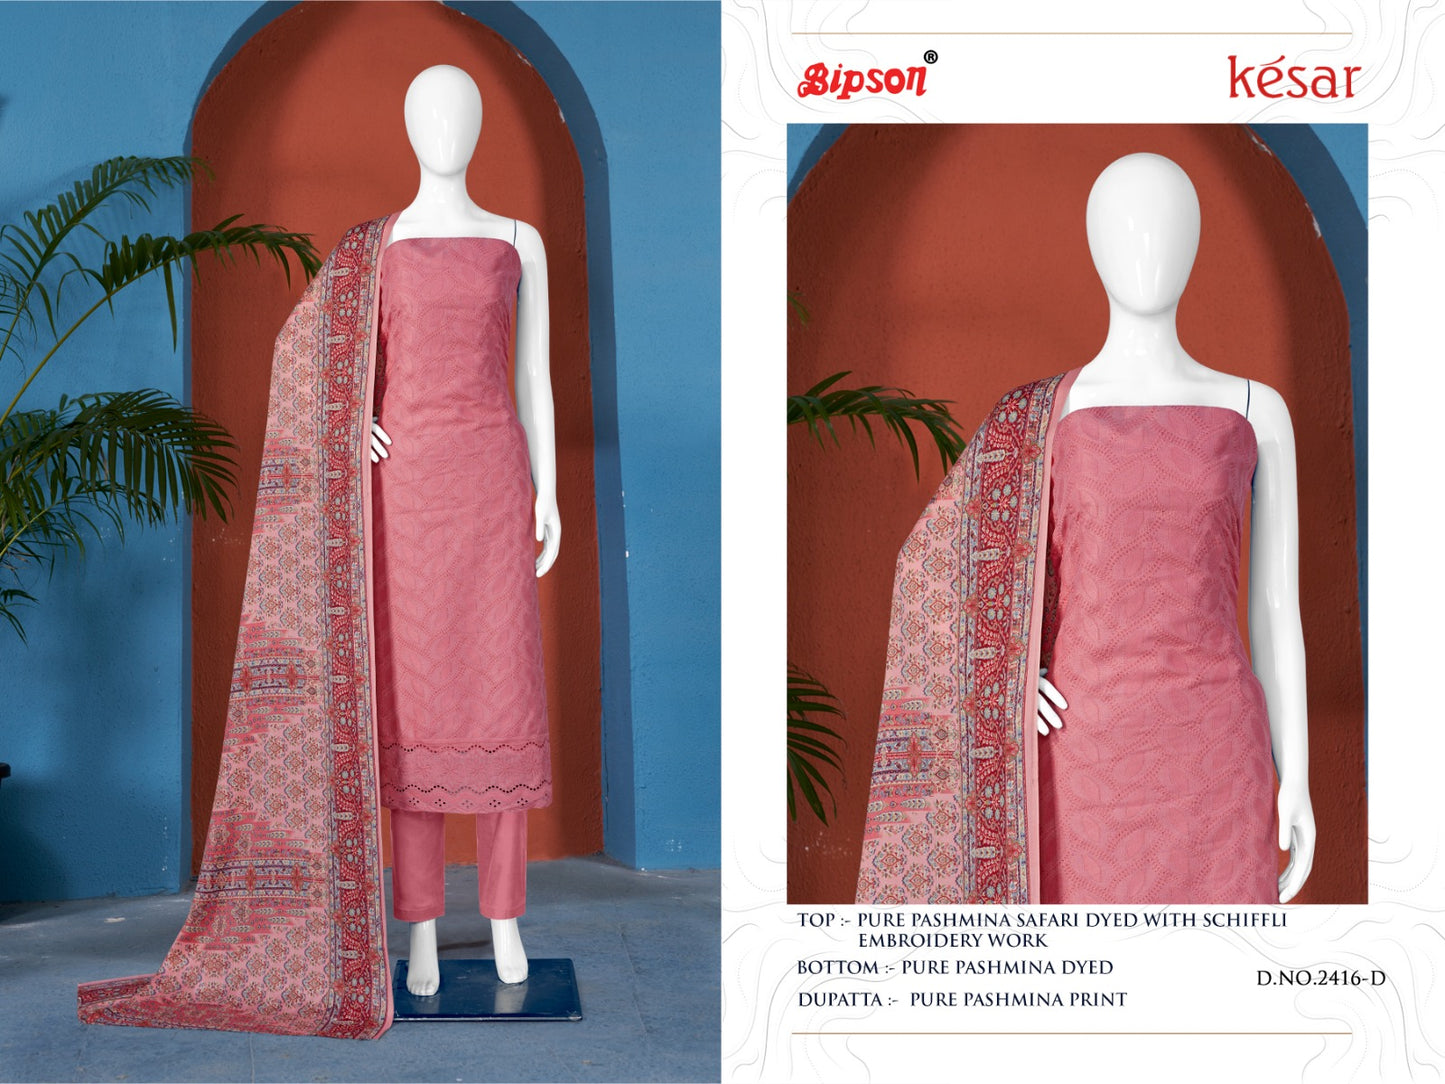 Kesar-2416 Bipson Prints Woolen Pashmina Suits